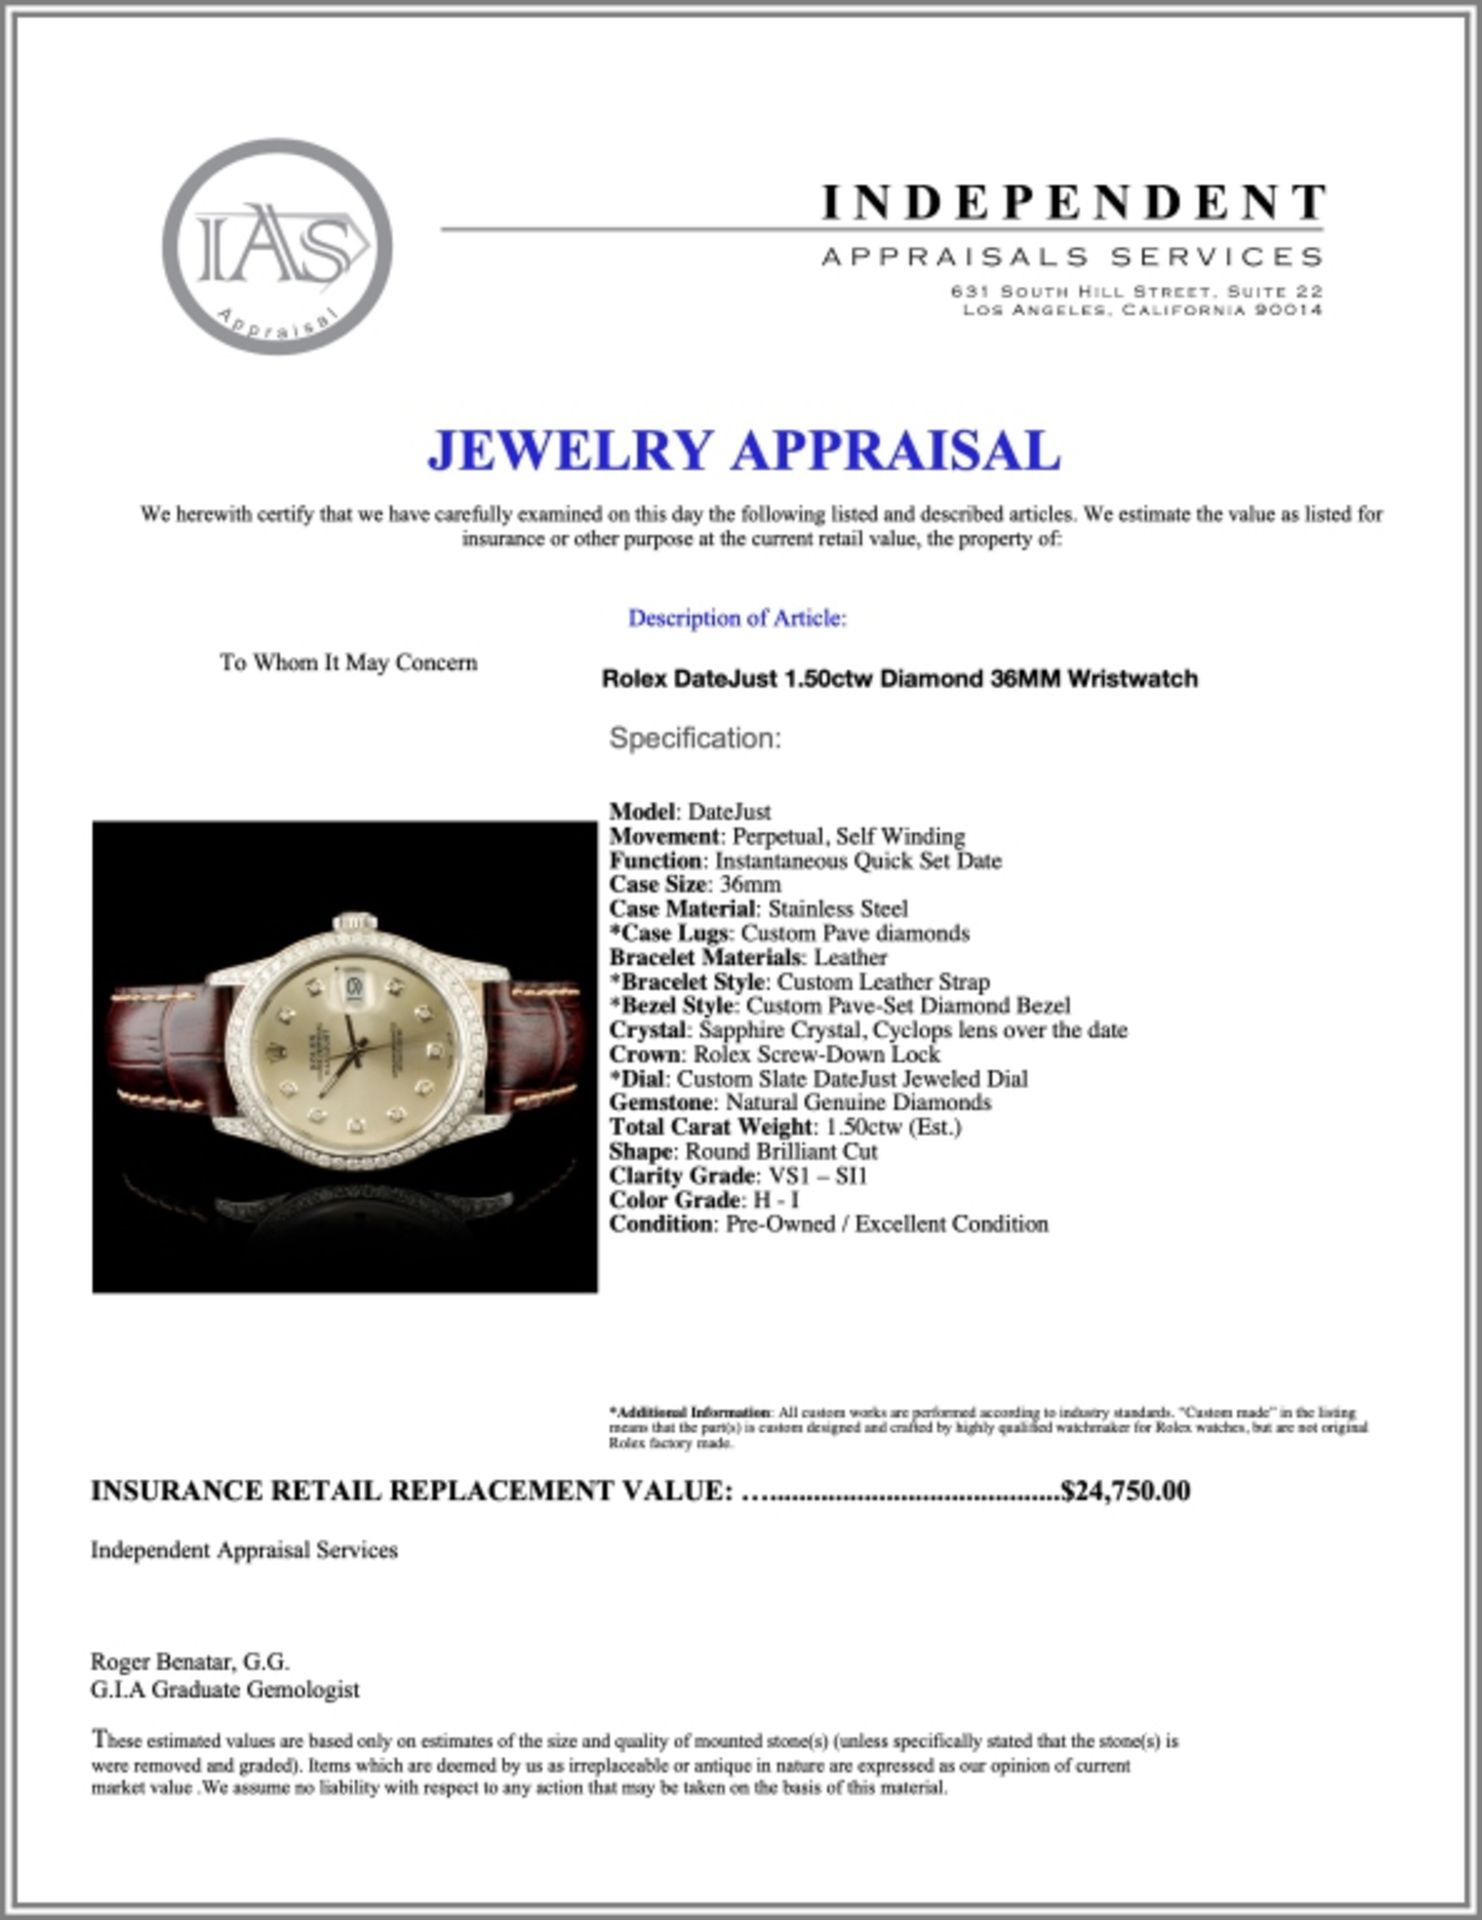 Rolex DateJust 1.50ctw Diamond 36MM Wristwatch - Image 7 of 7